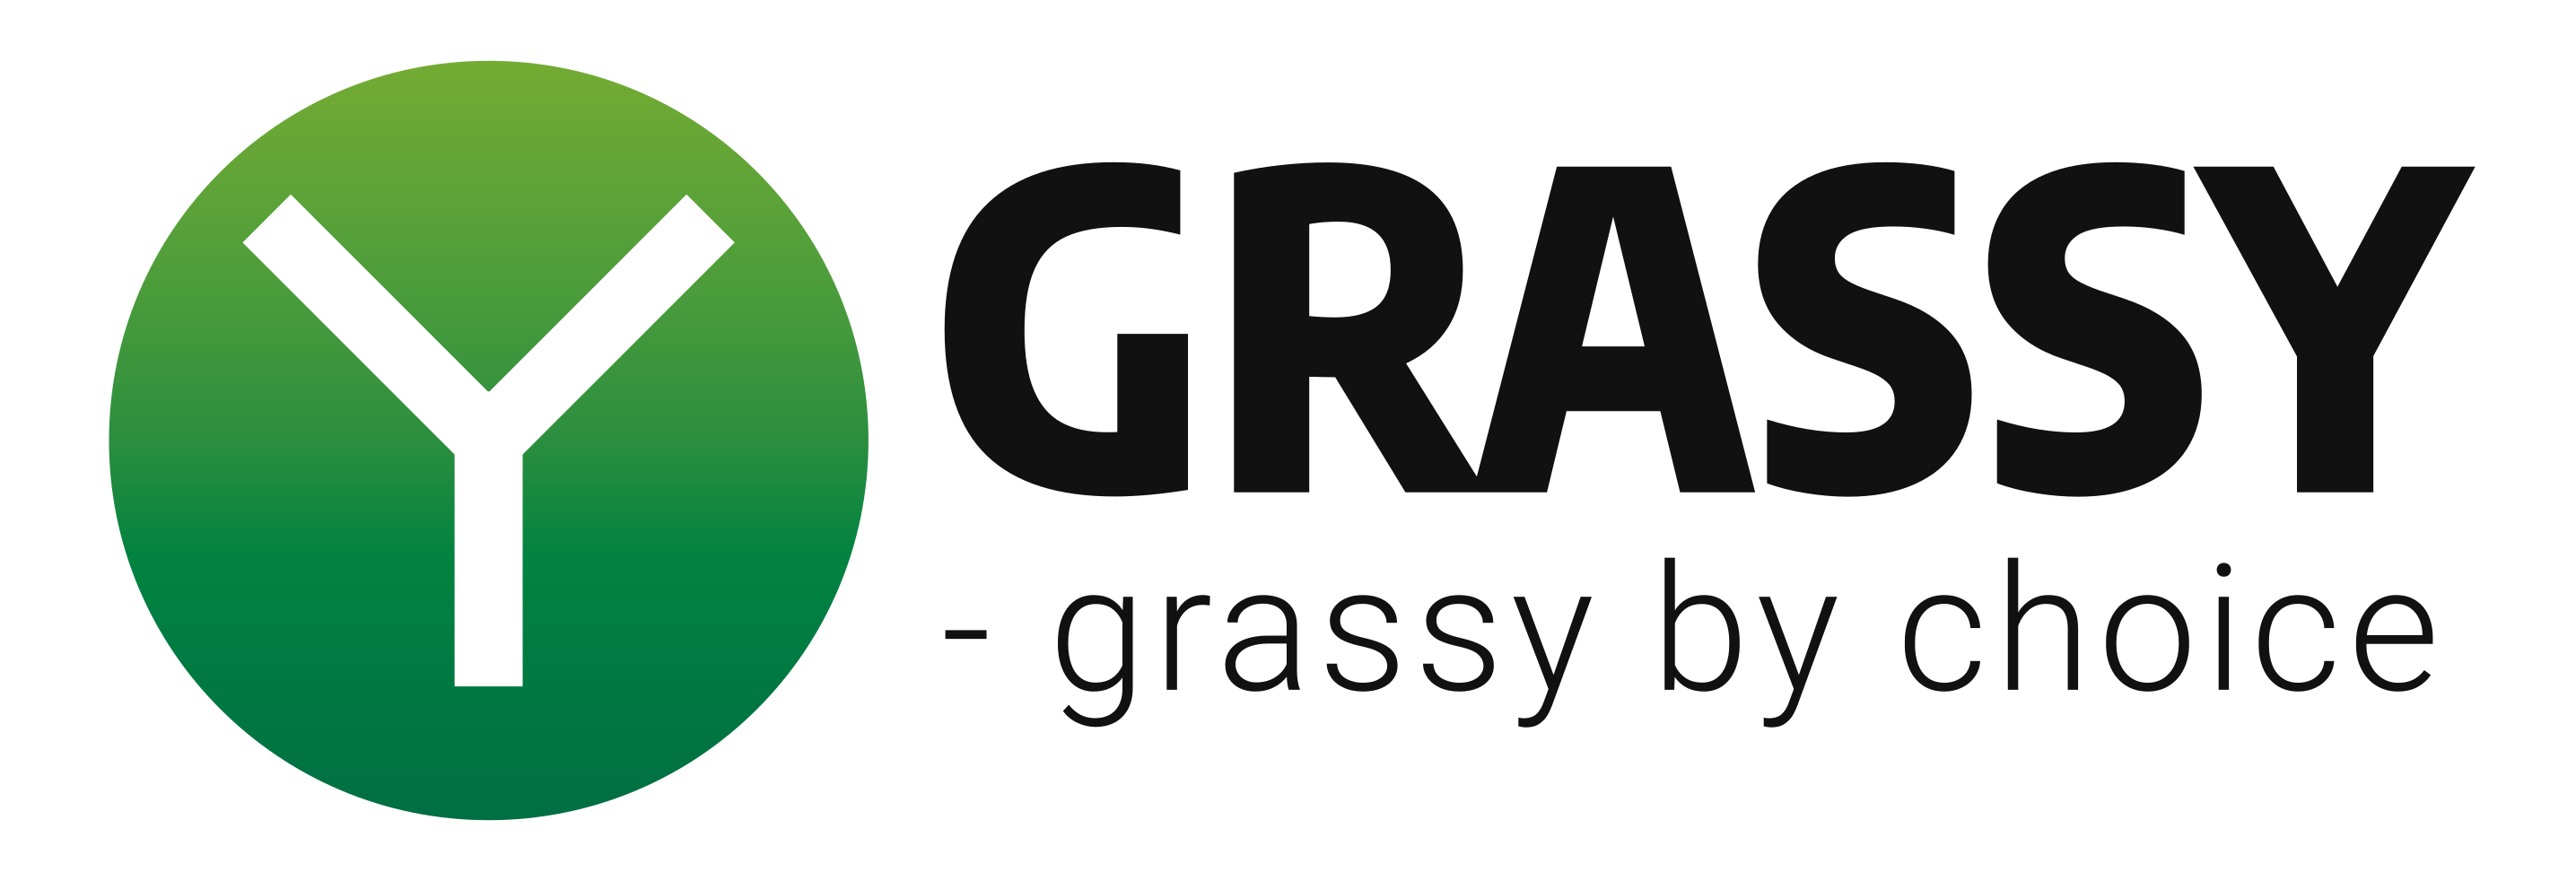 Grassy ApS